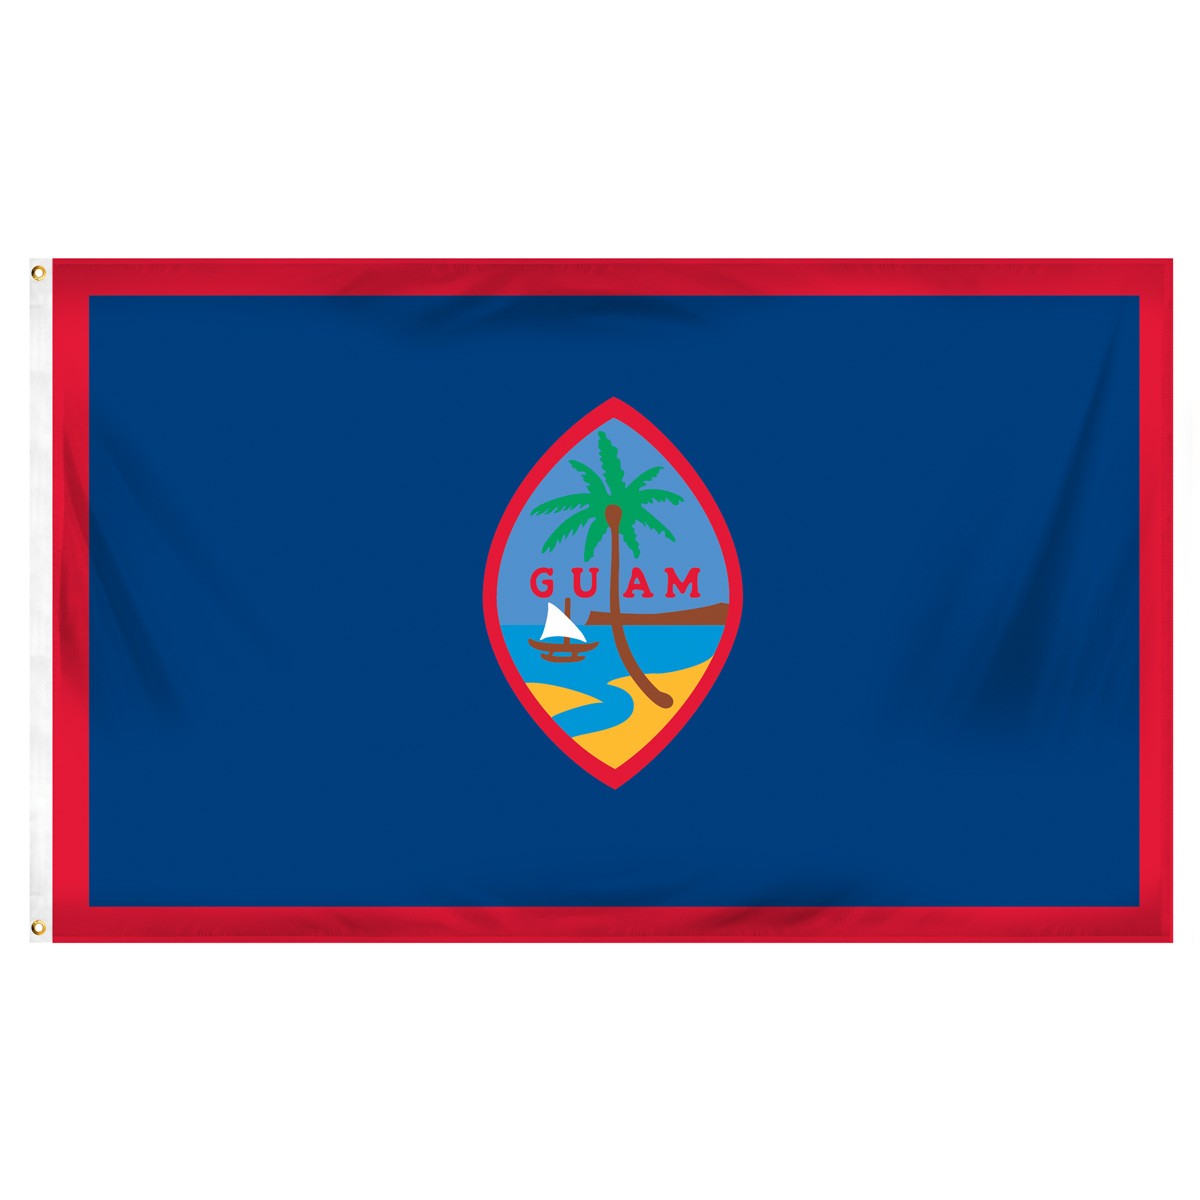 Guam Executive Flags